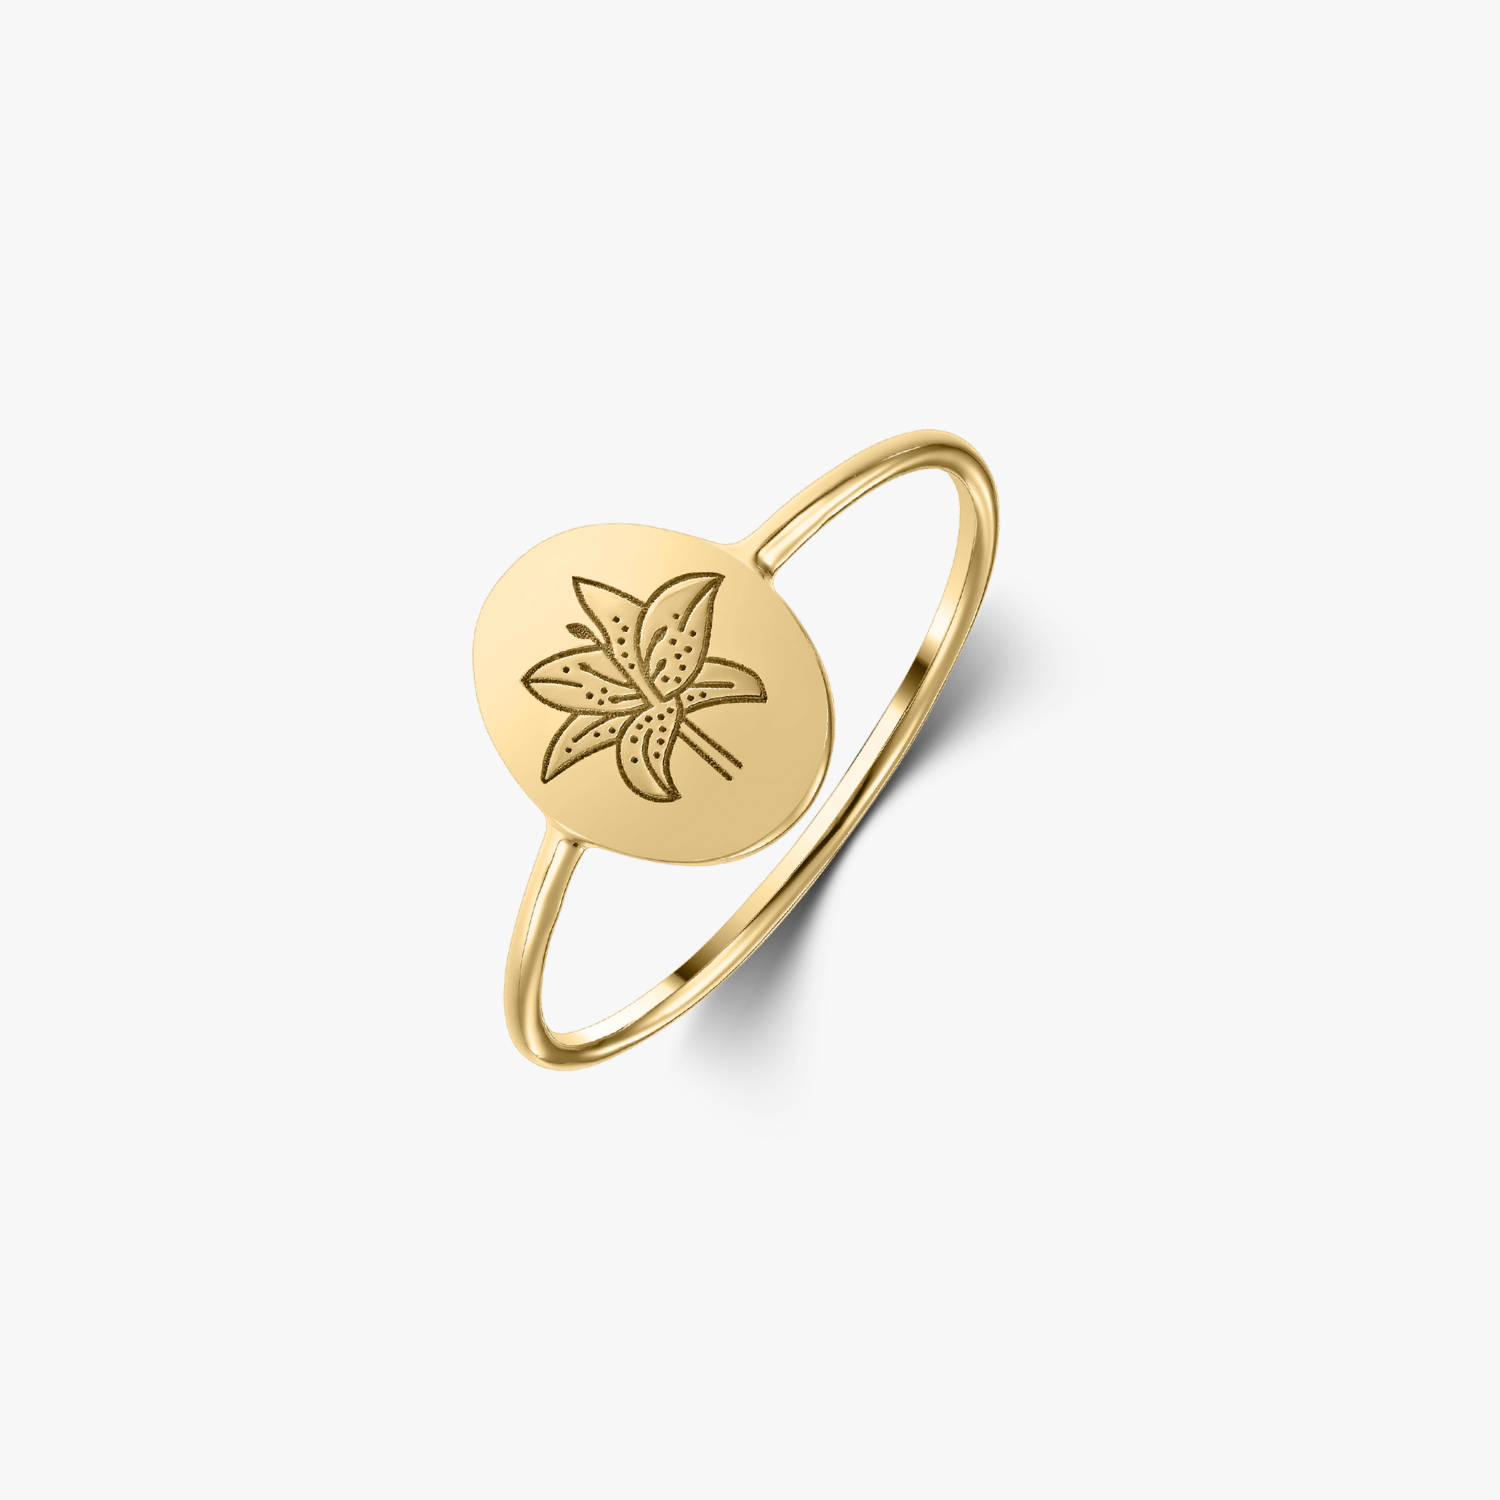 Birthflower gold ring - May Lily